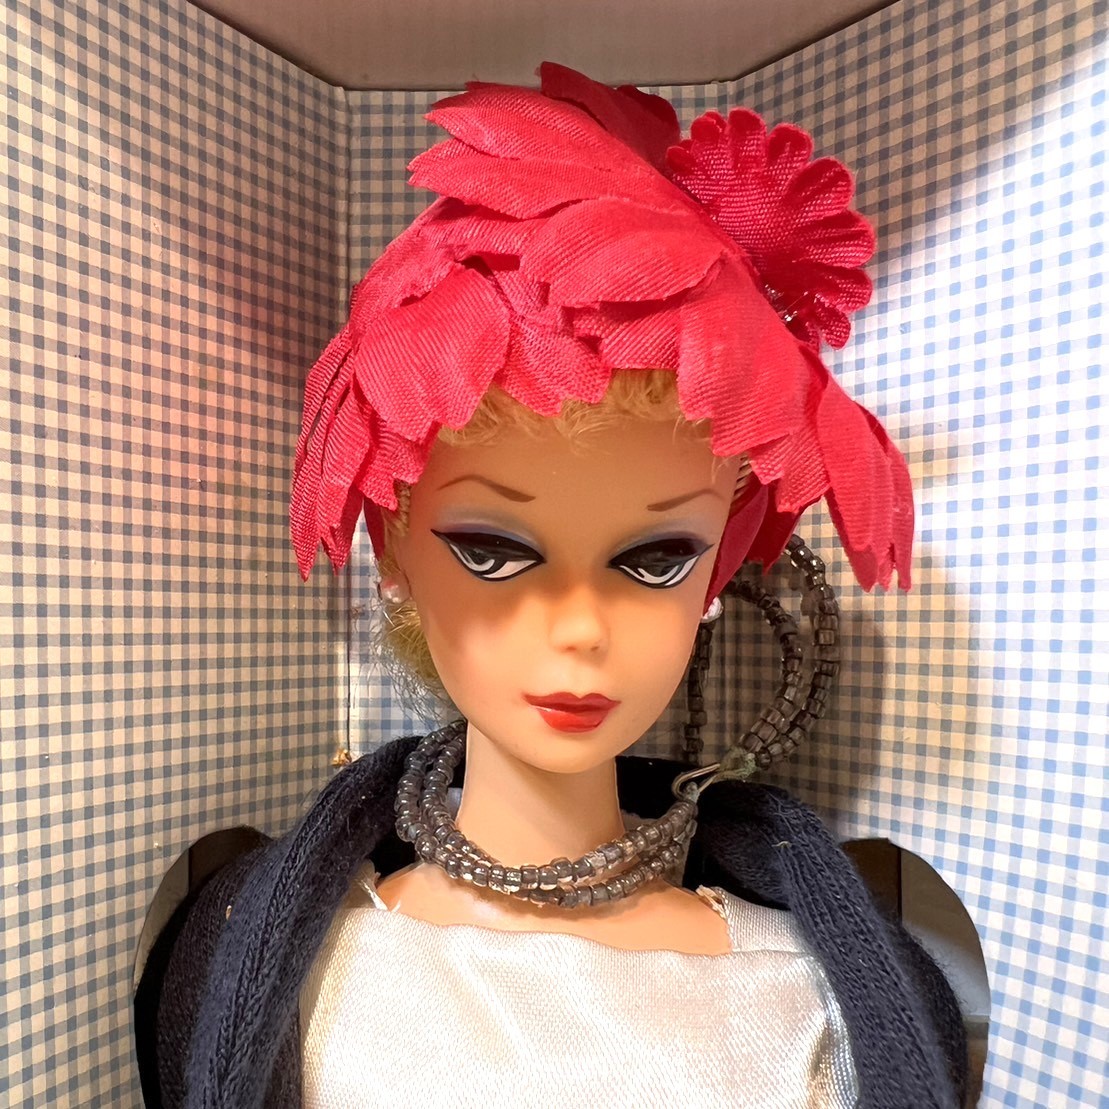 新品本物 バービー 復刻版 1959 SET COMMUTER Barbie Mattel 人形